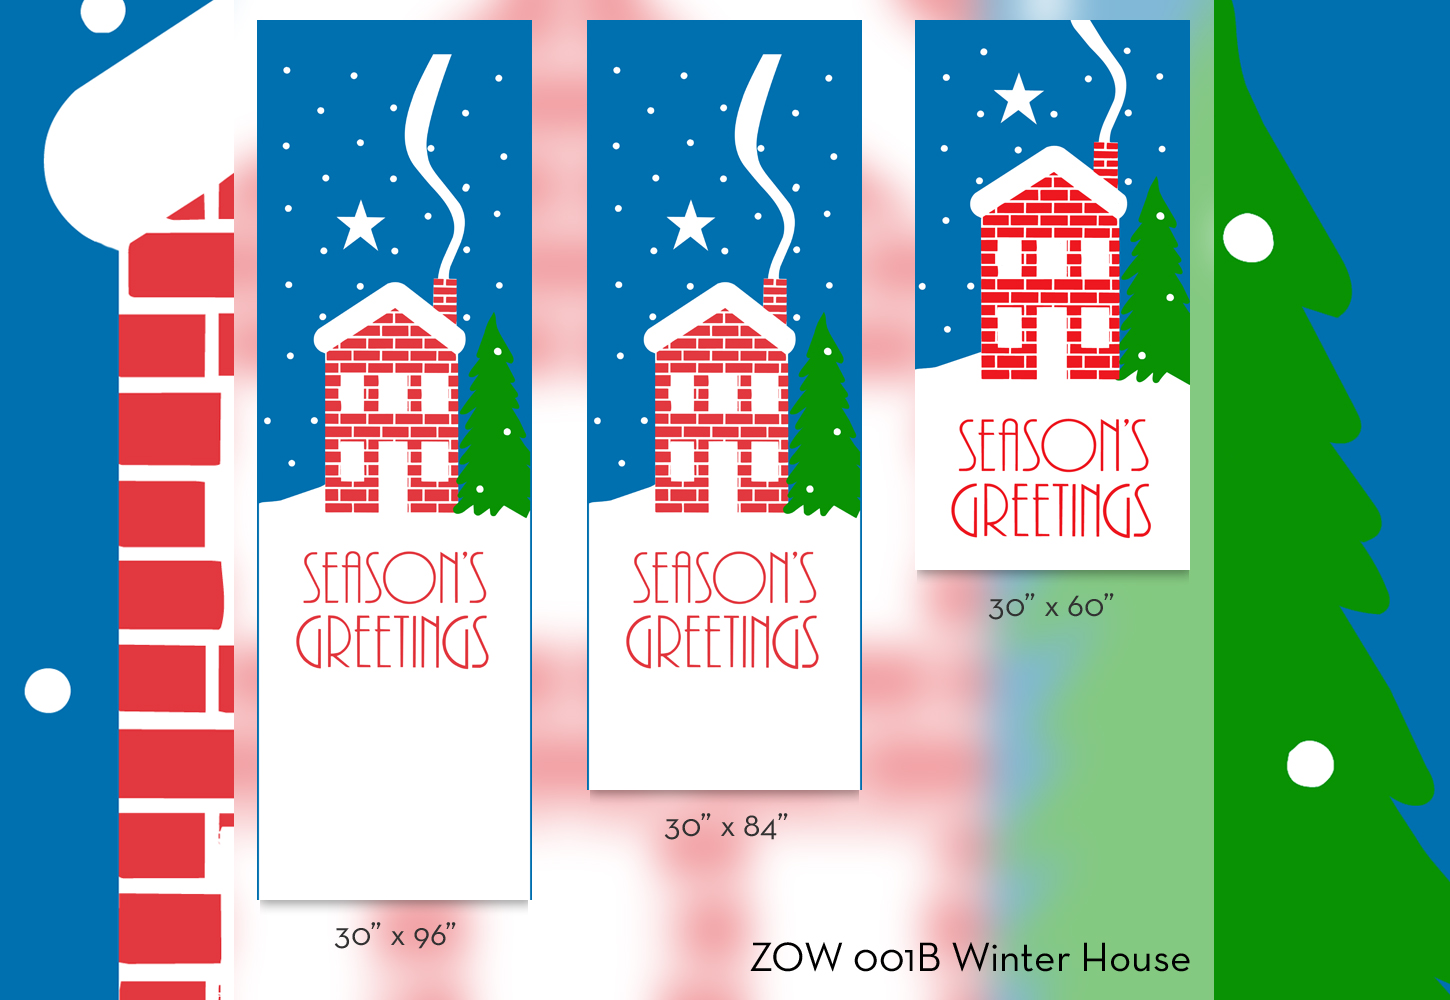 ZOW 001B Winter House